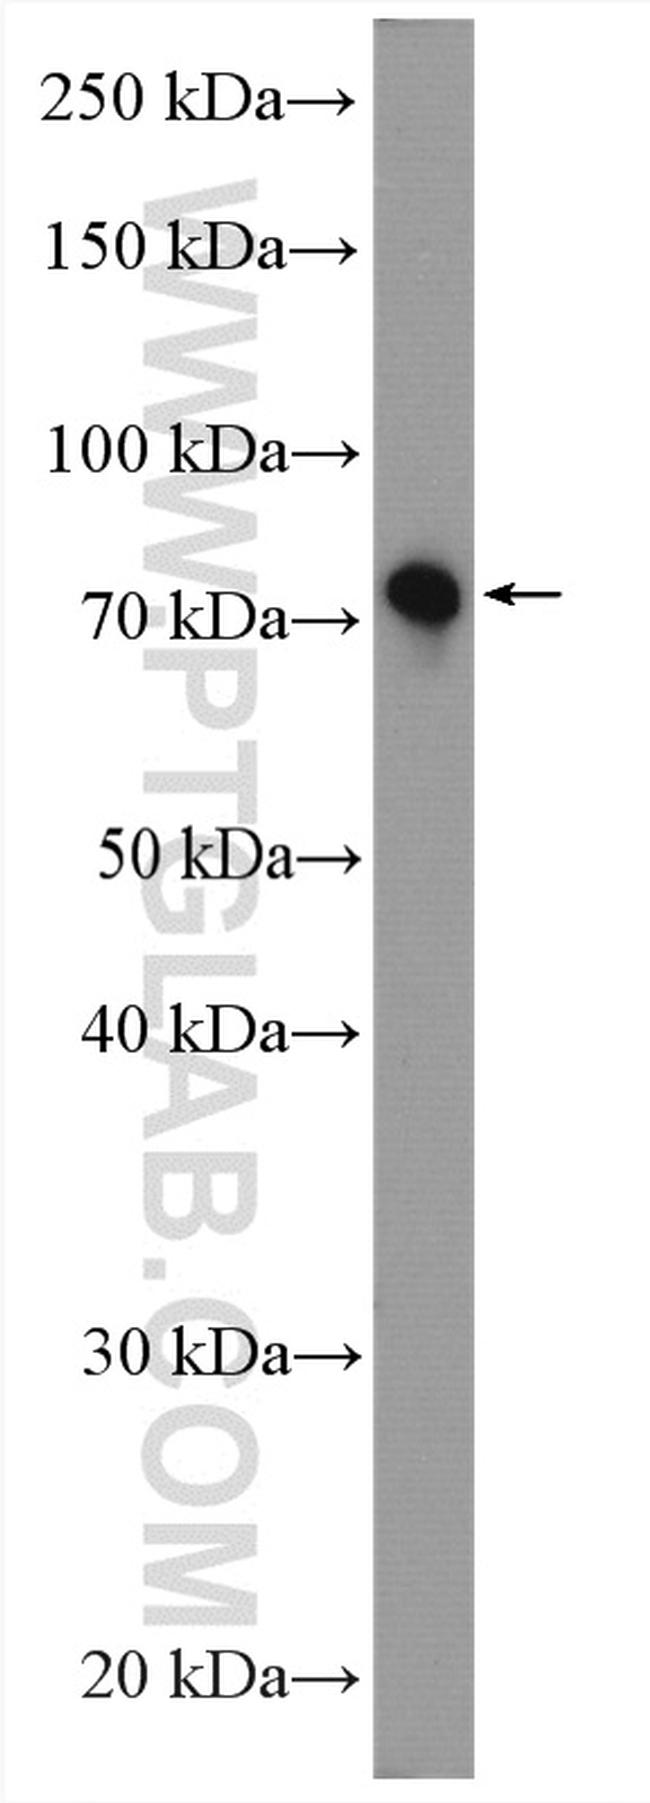 SHCBP1 Antibody in Western Blot (WB)